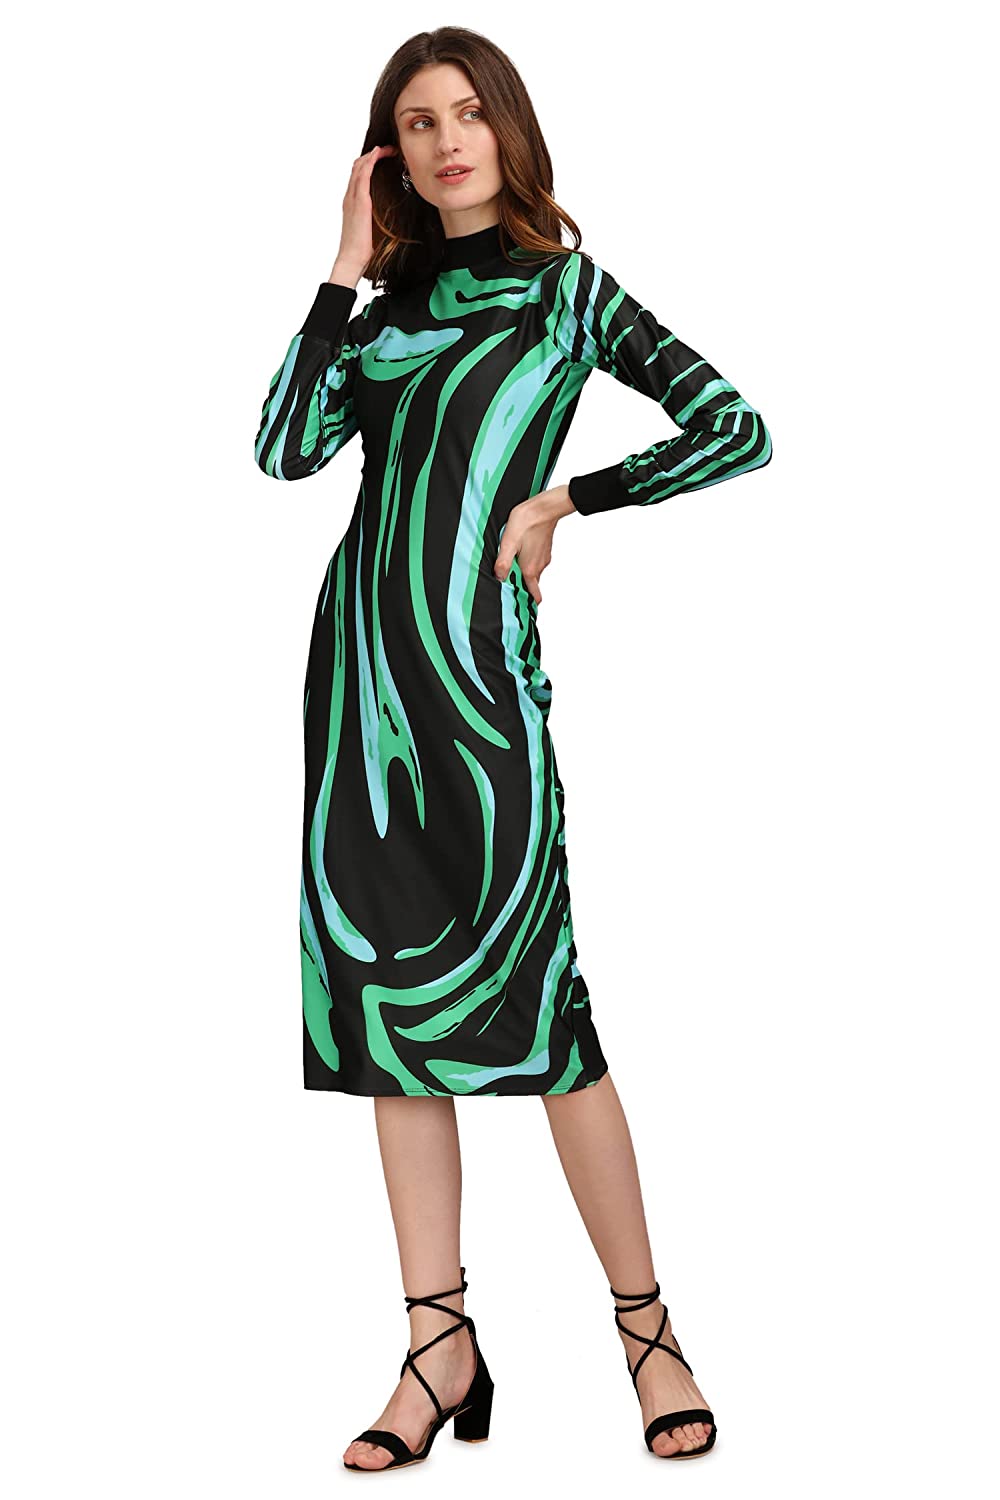 PURVAJA Women’s Bodycon Knee Length Dress -  Dresses in Sri Lanka from Arcade Online Shopping - Just Rs. 4699!